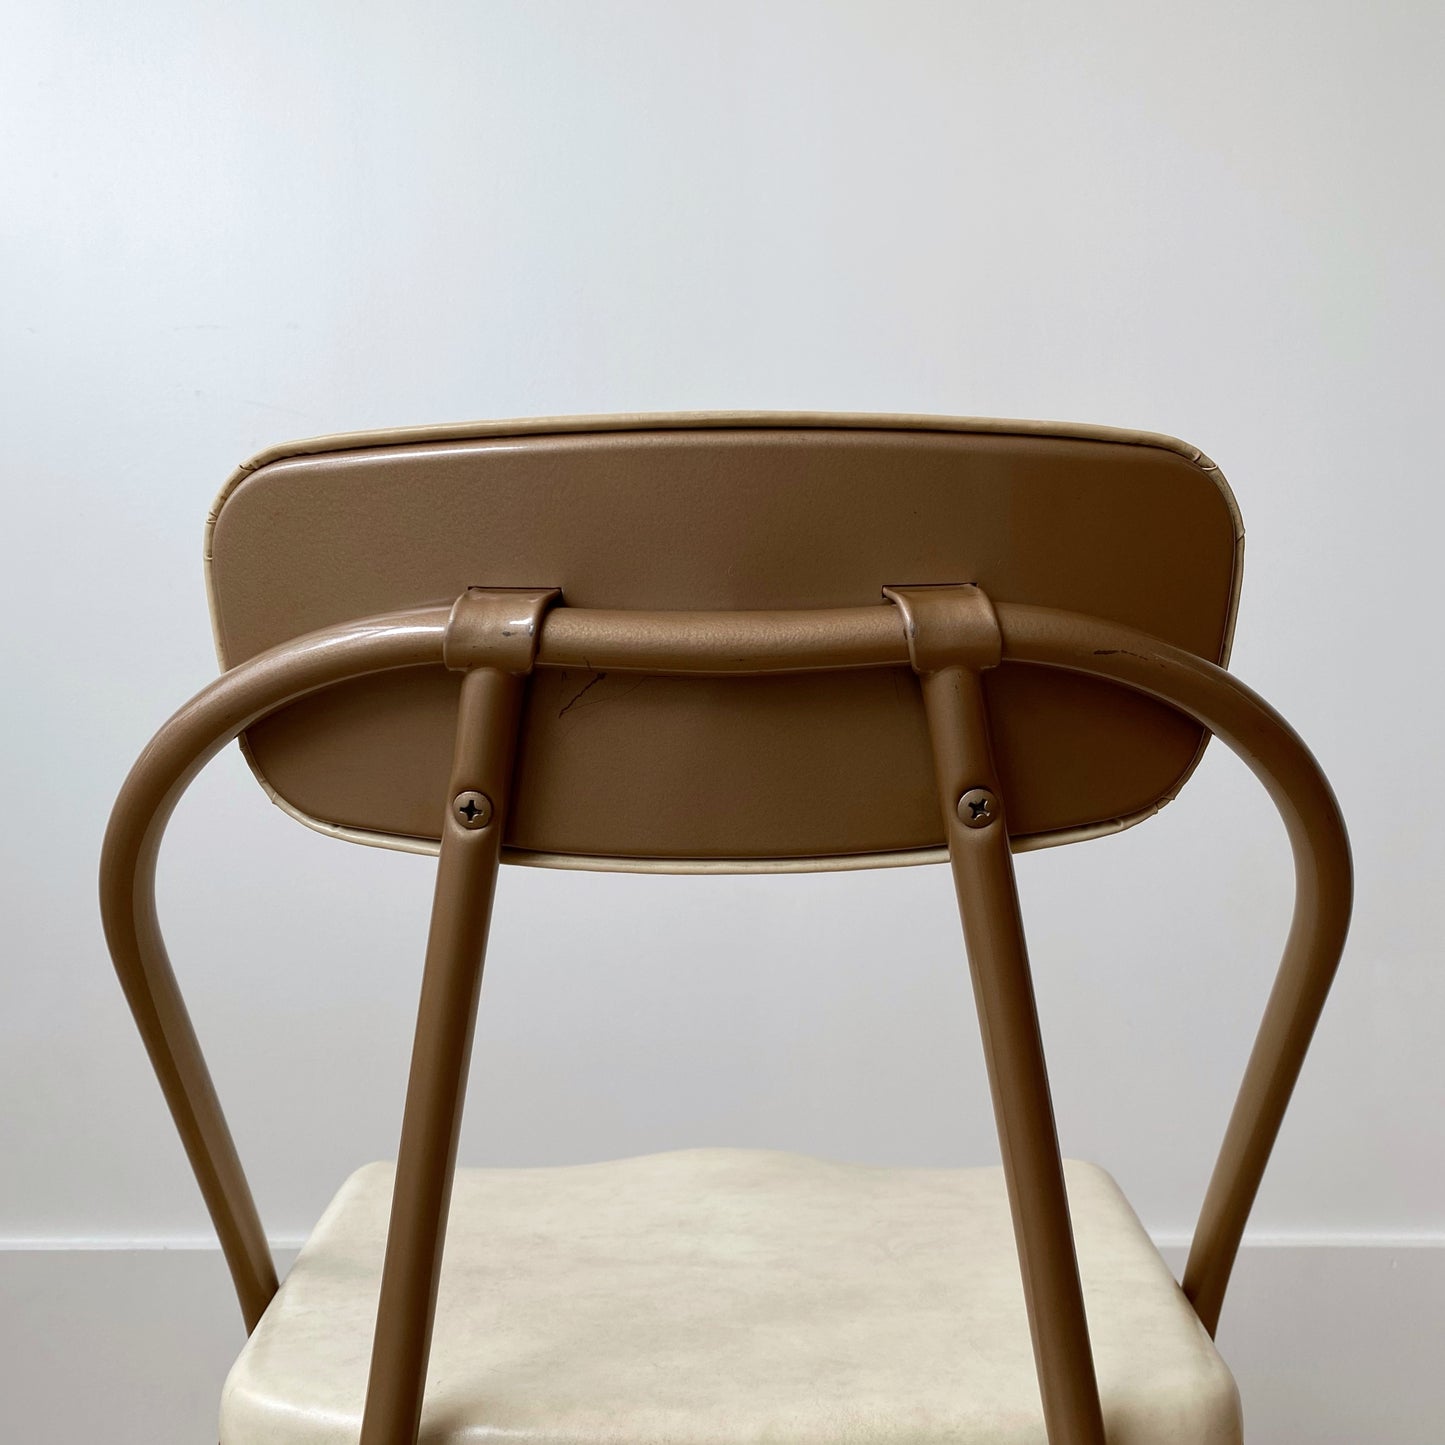 Vintage 1954 Costco Folding Chair, Single